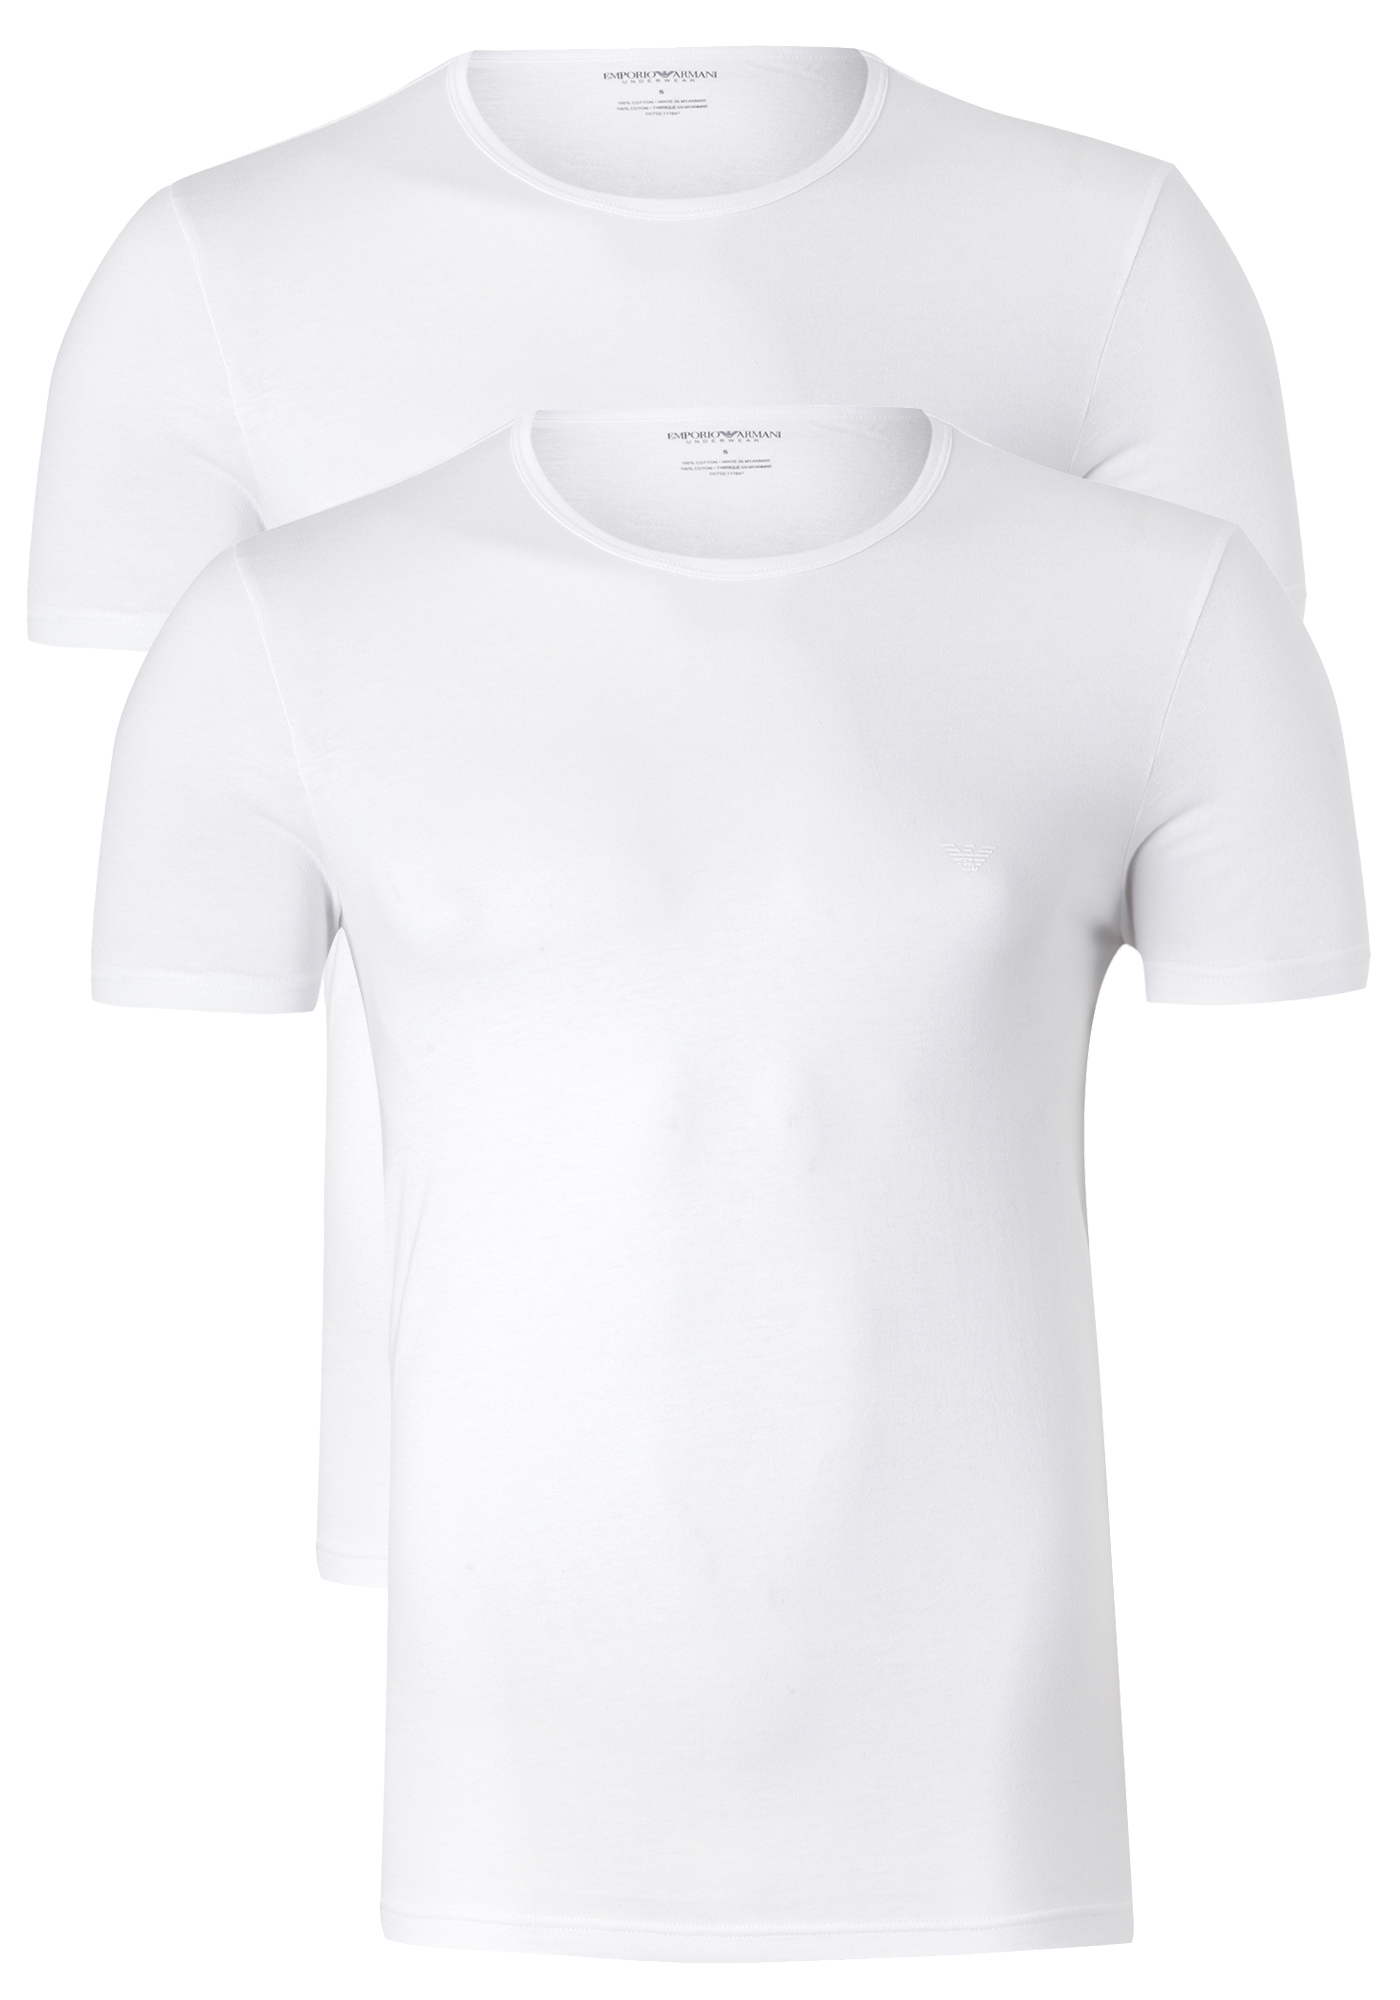 contact Knikken Registratie Armani T-shirts O-hals (2-pack), wit - Gratis bezorgd